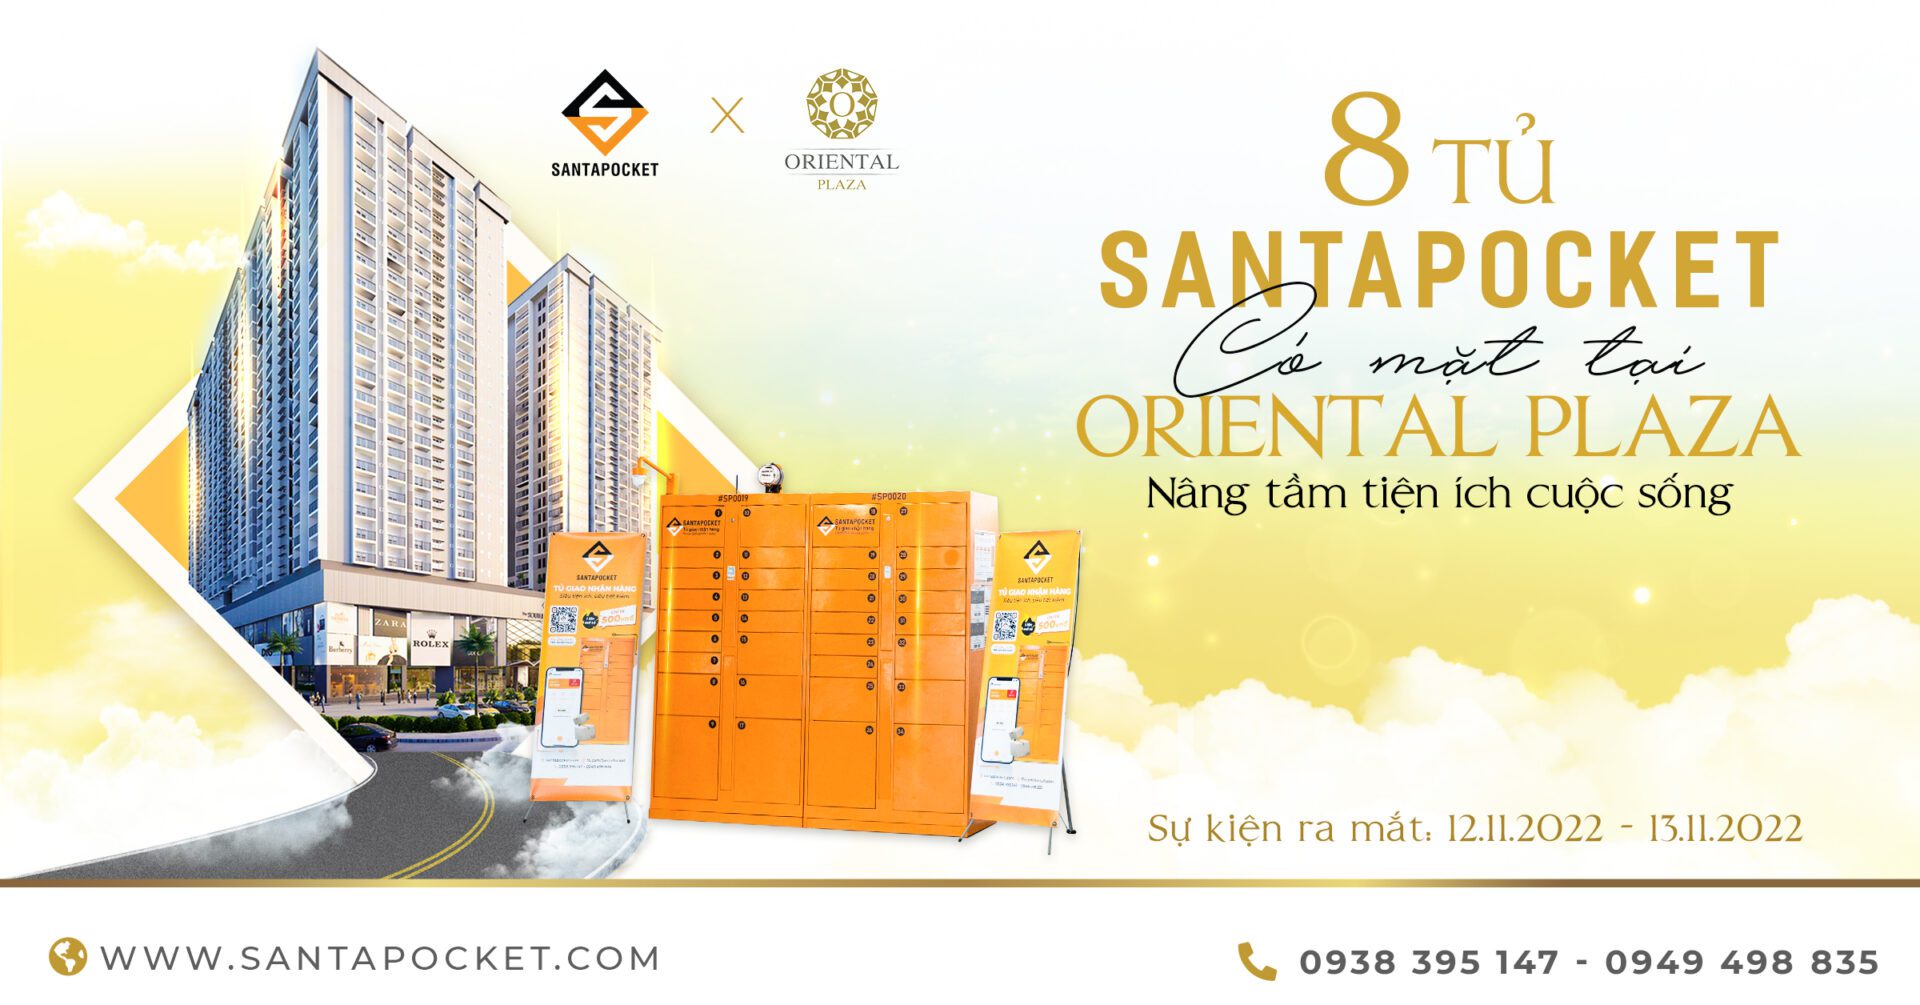 SantaPocket’s next destination: Oriental Plaza